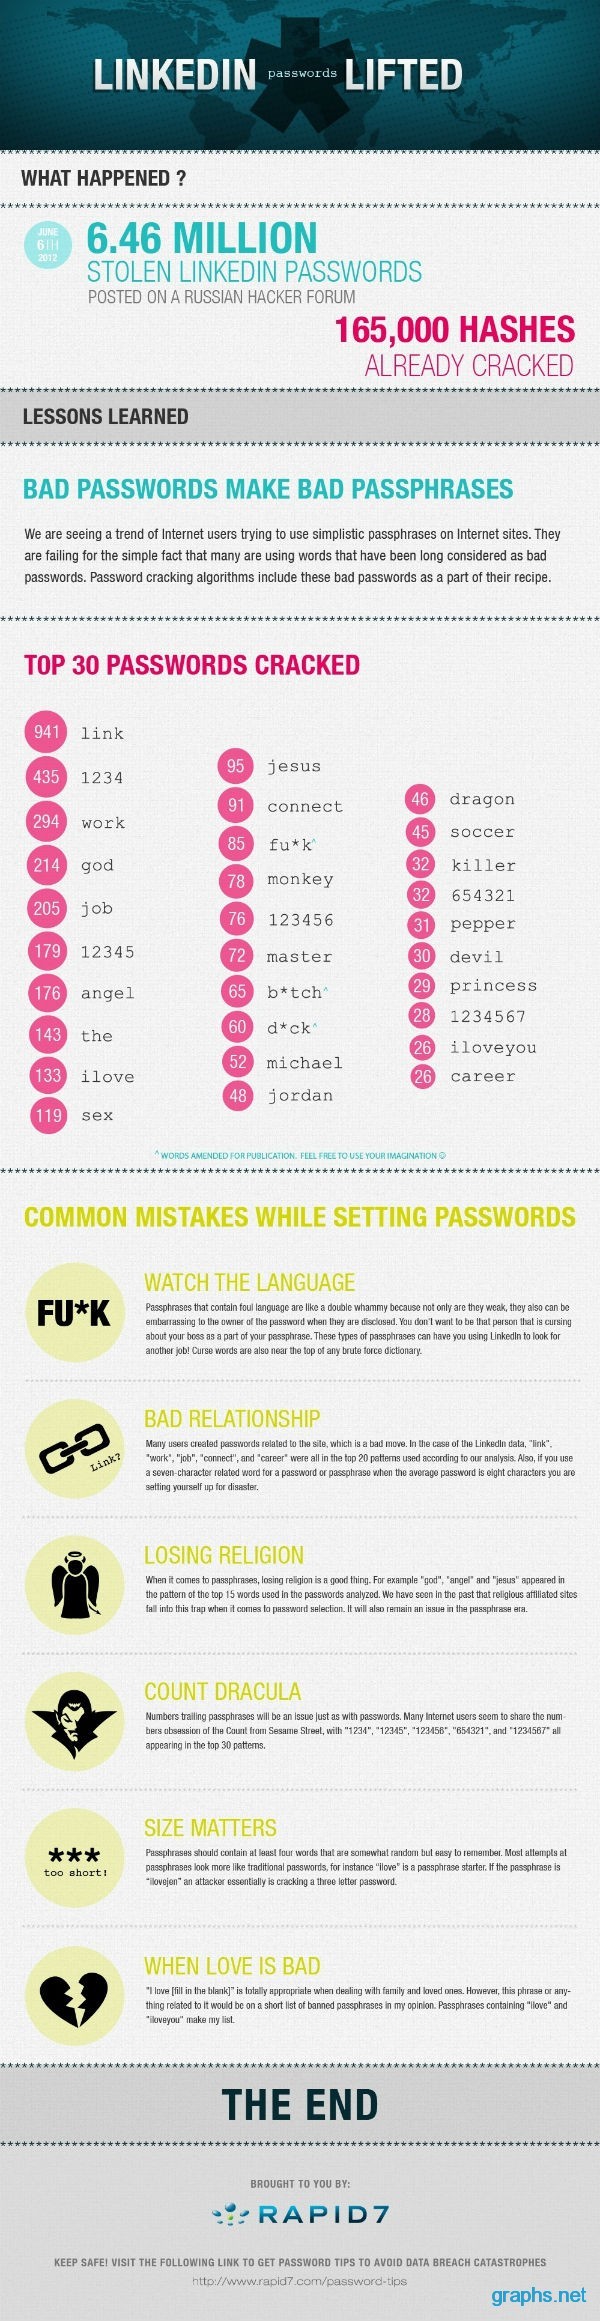 linkedin password security tips